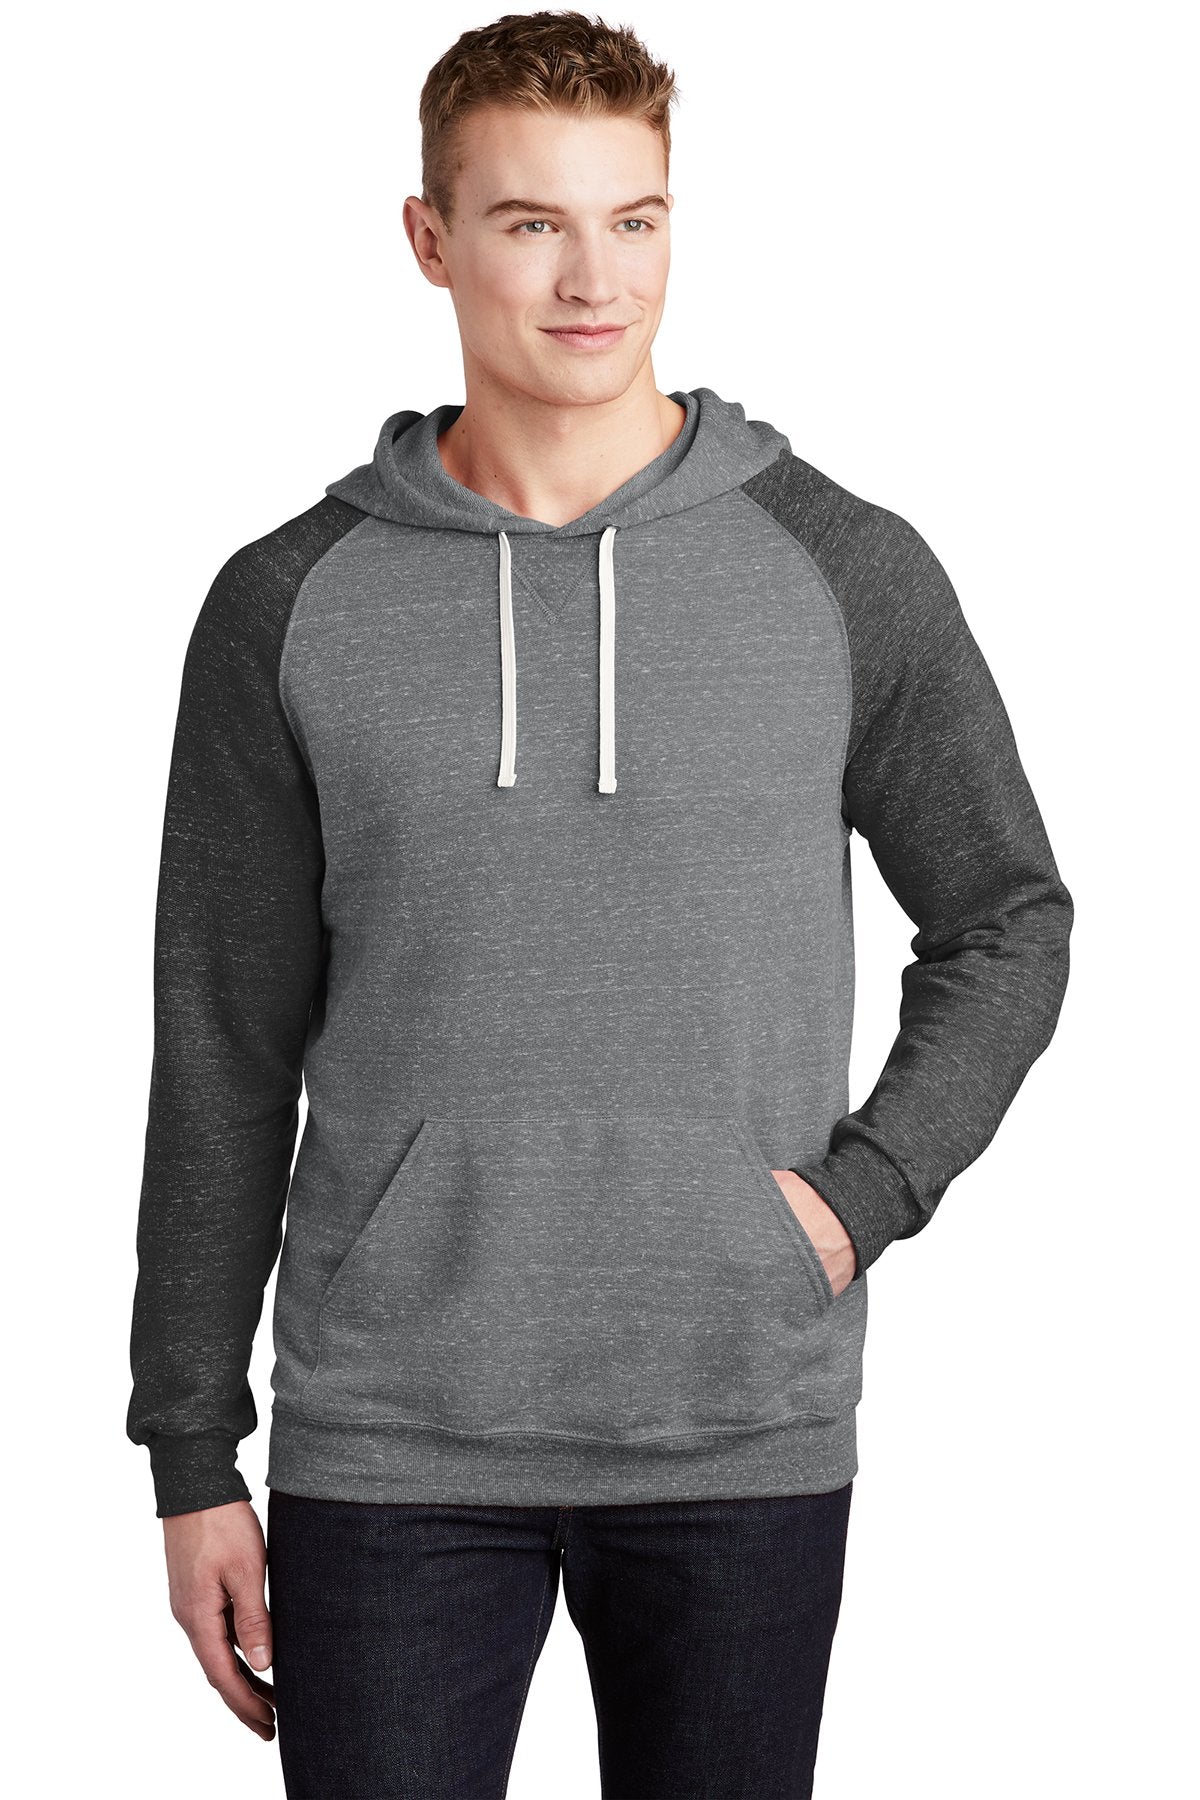 Jerzees Charcoal/ Black 90M sweatshirts with logos